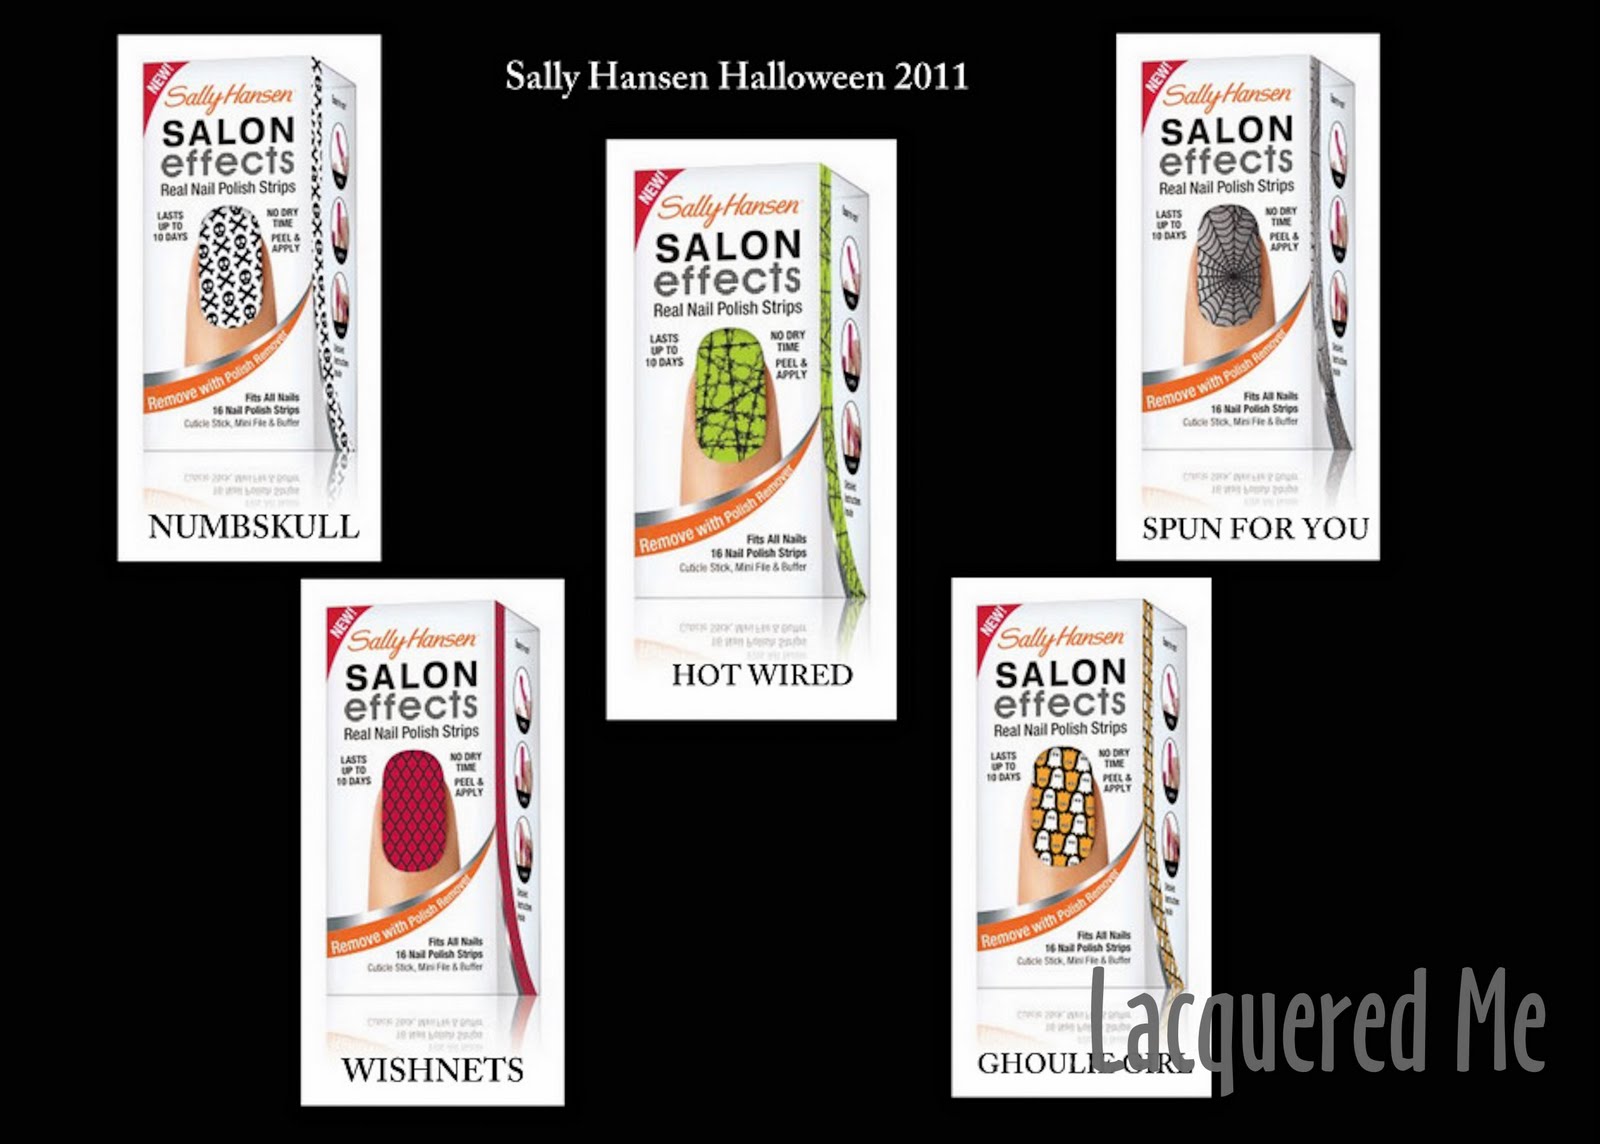 1. Sally Hansen Salon Effects Real Nail Polish Strips - wide 6